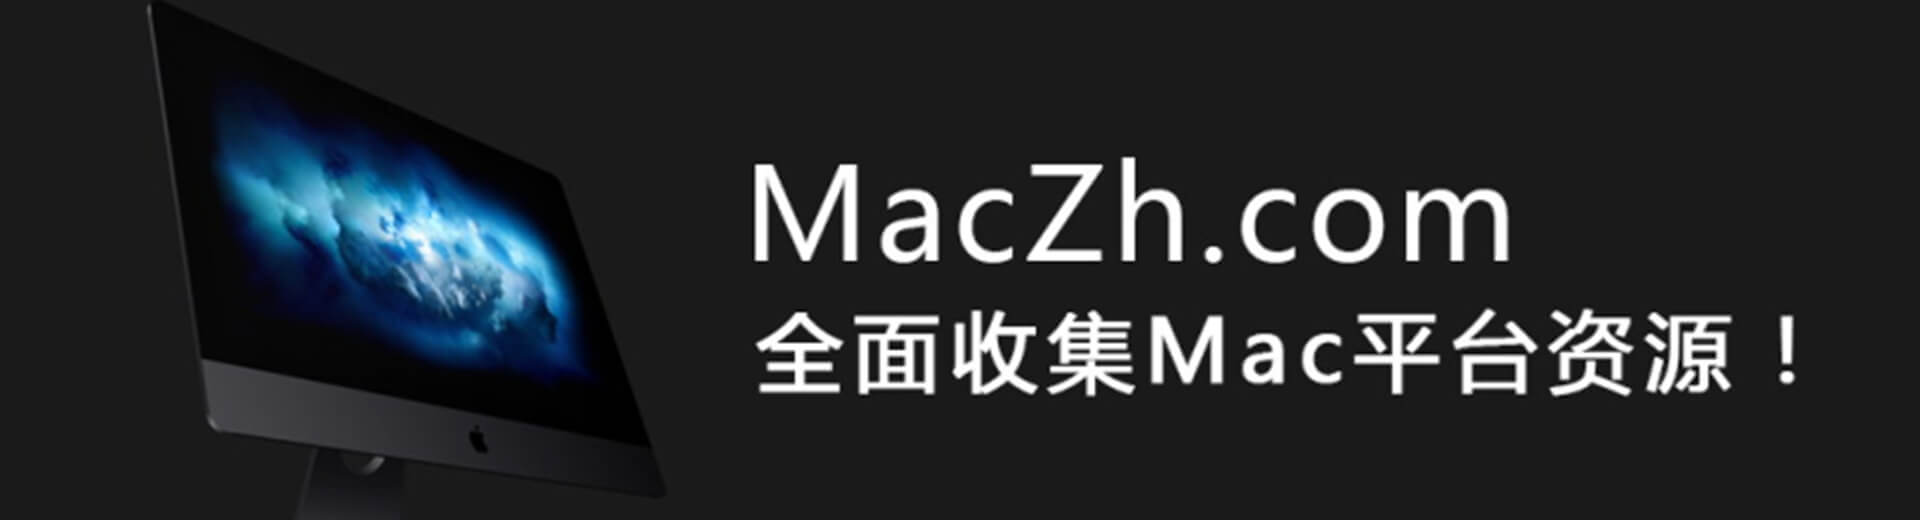 Mac中文